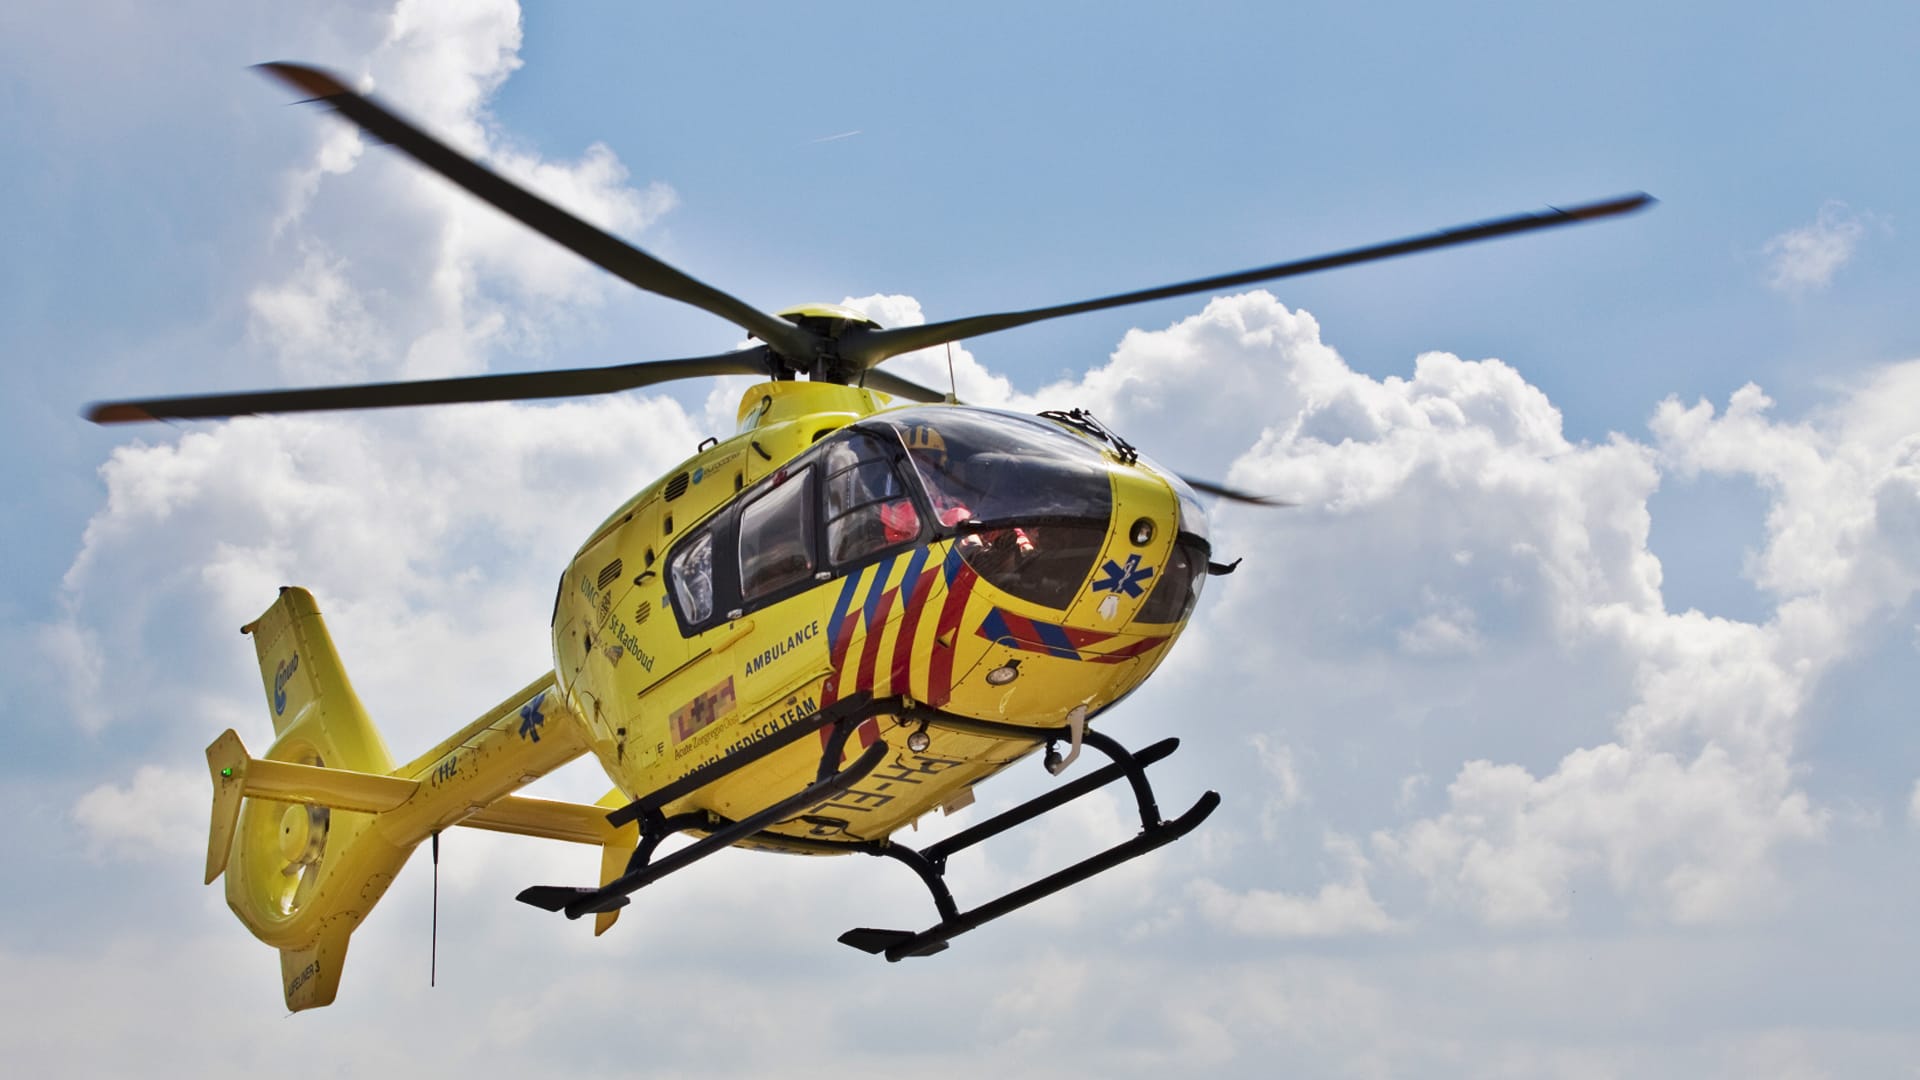 Twitteraccount traumahelikopter slaat flater met rijmende tweets: 'Misplaatst'